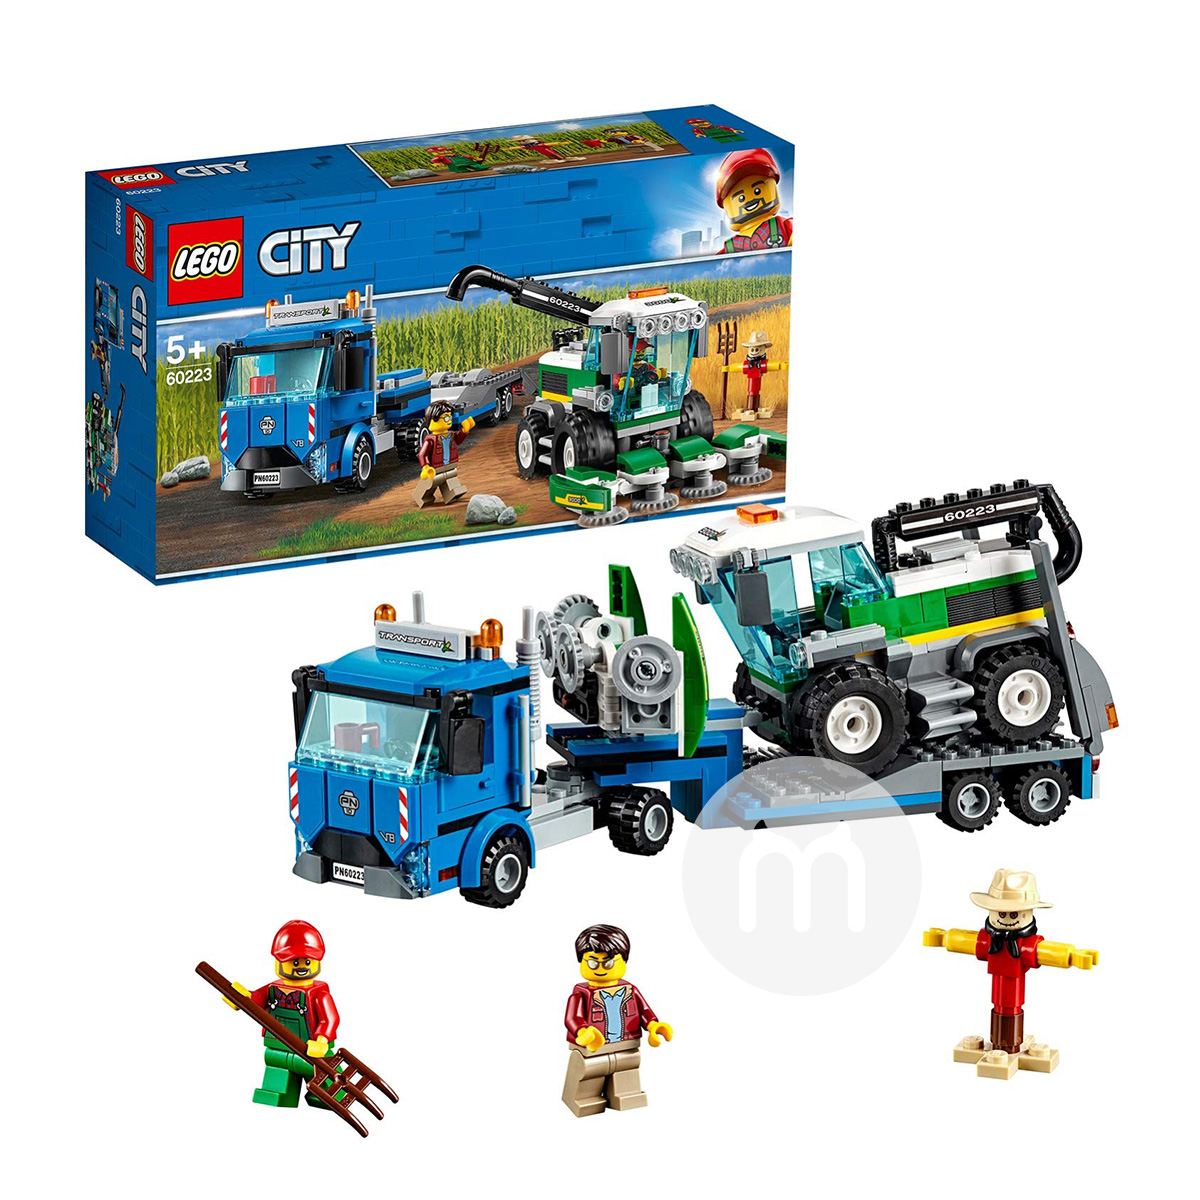 LEGO 丹麥樂高城市系列收割機運輸車60223 海外本土原版